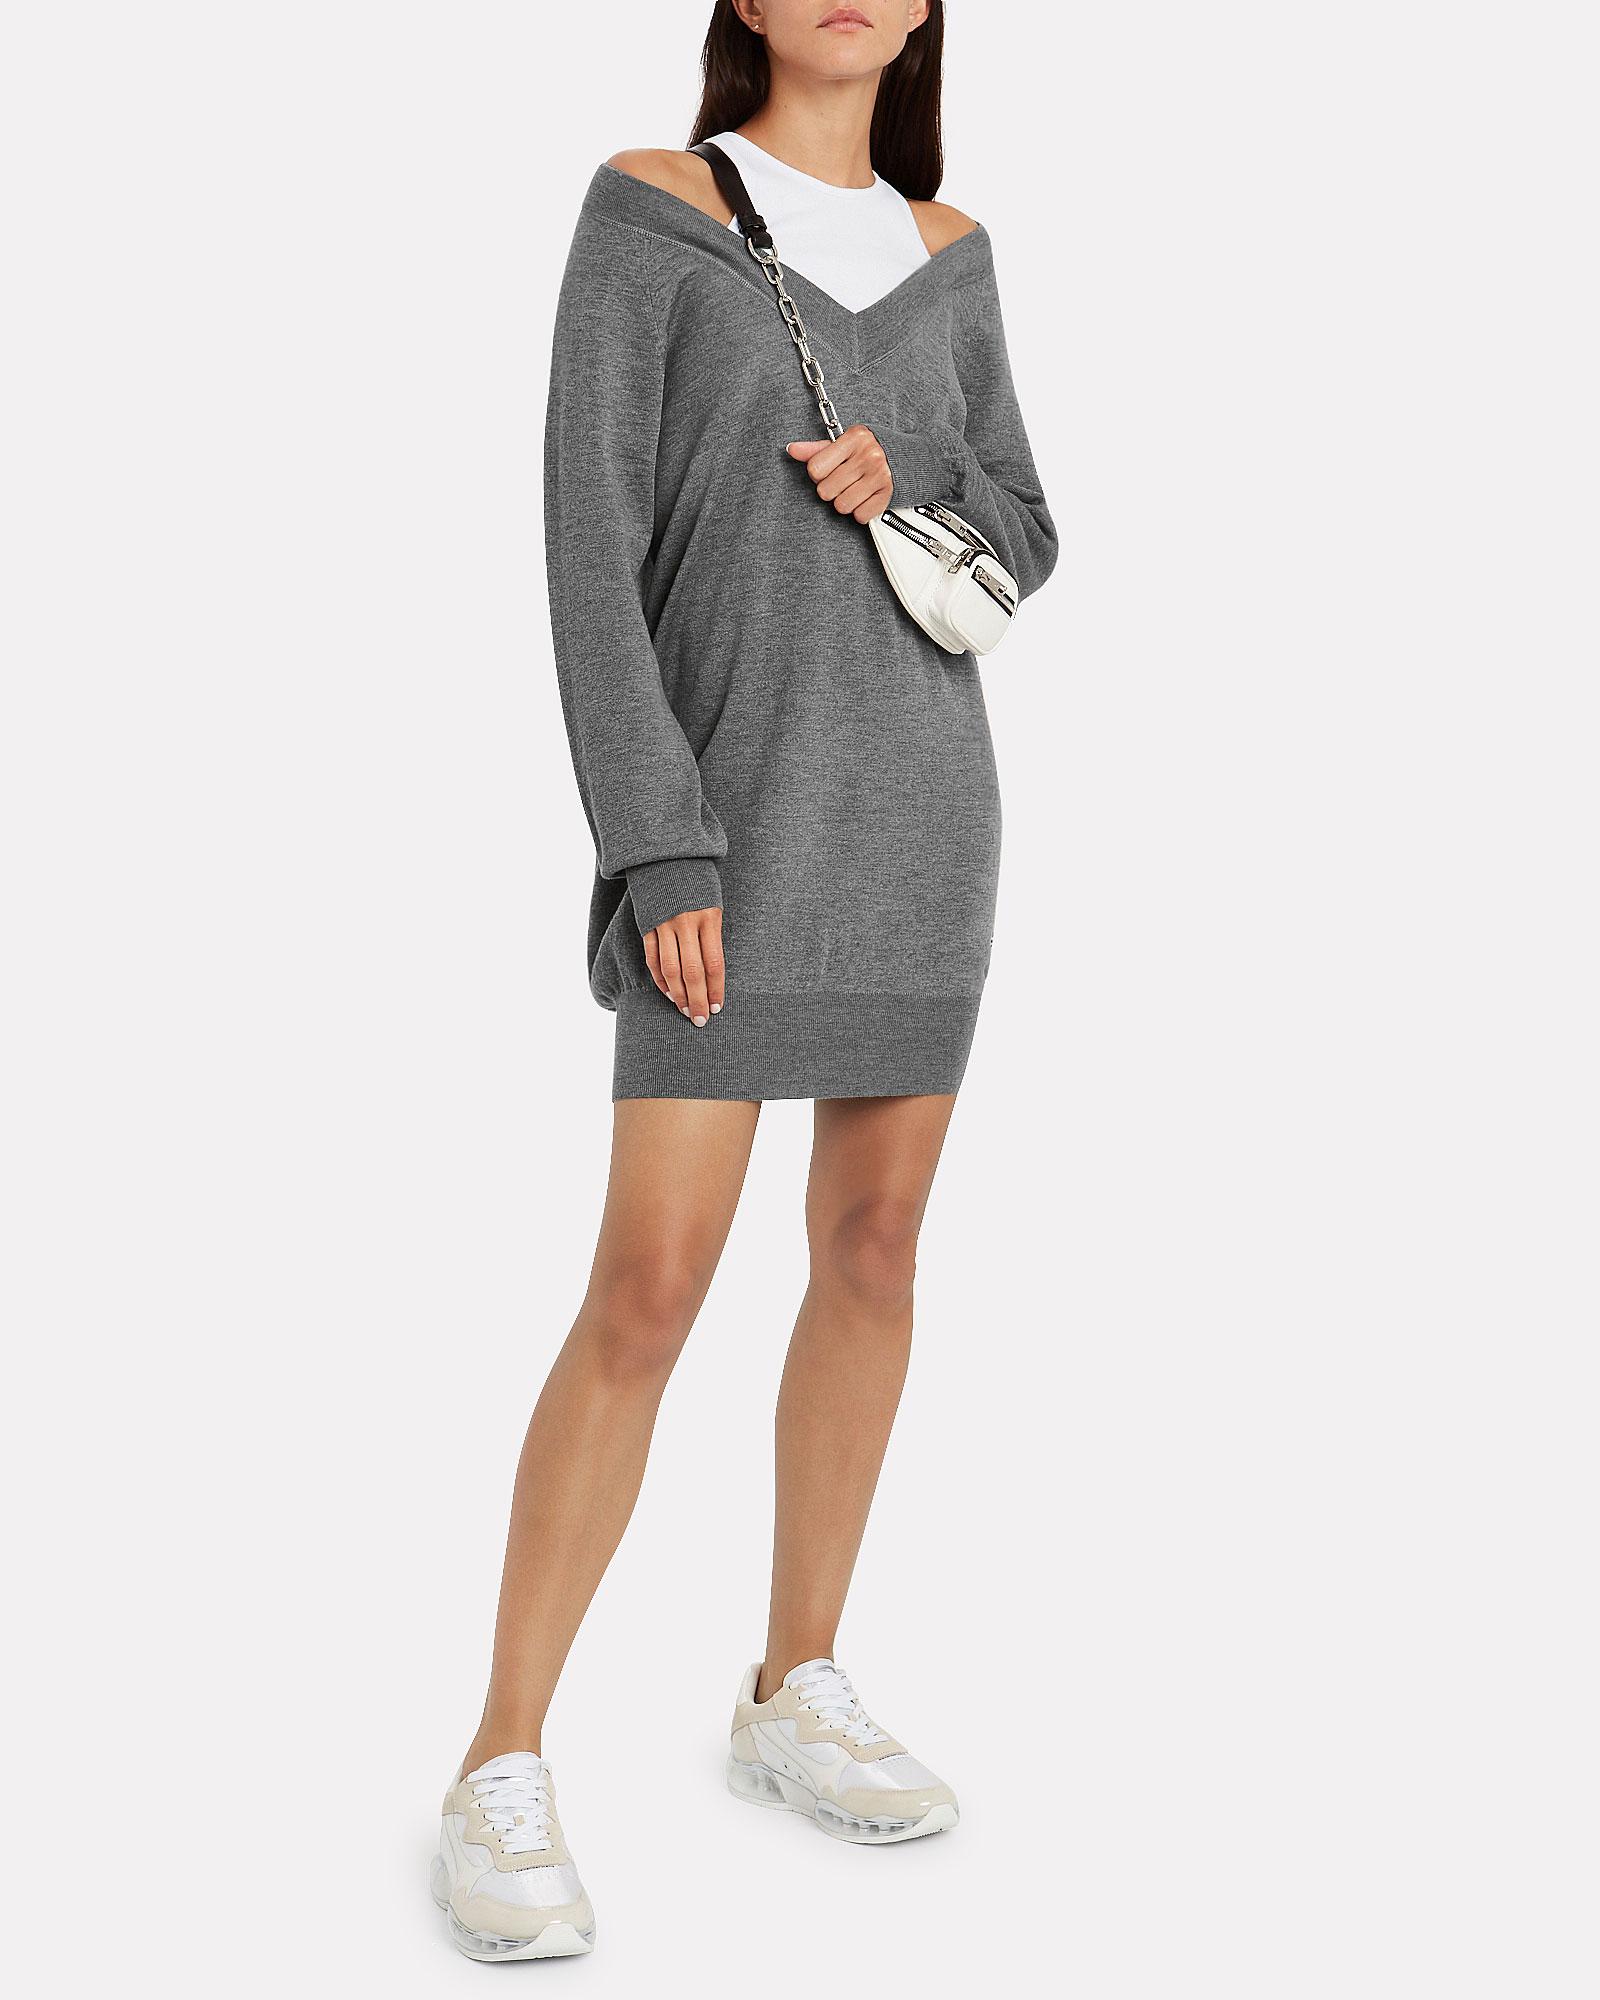 T By Alexander Wang Bi-layer Wool Sweater Dress in Grey (Gray) - Lyst